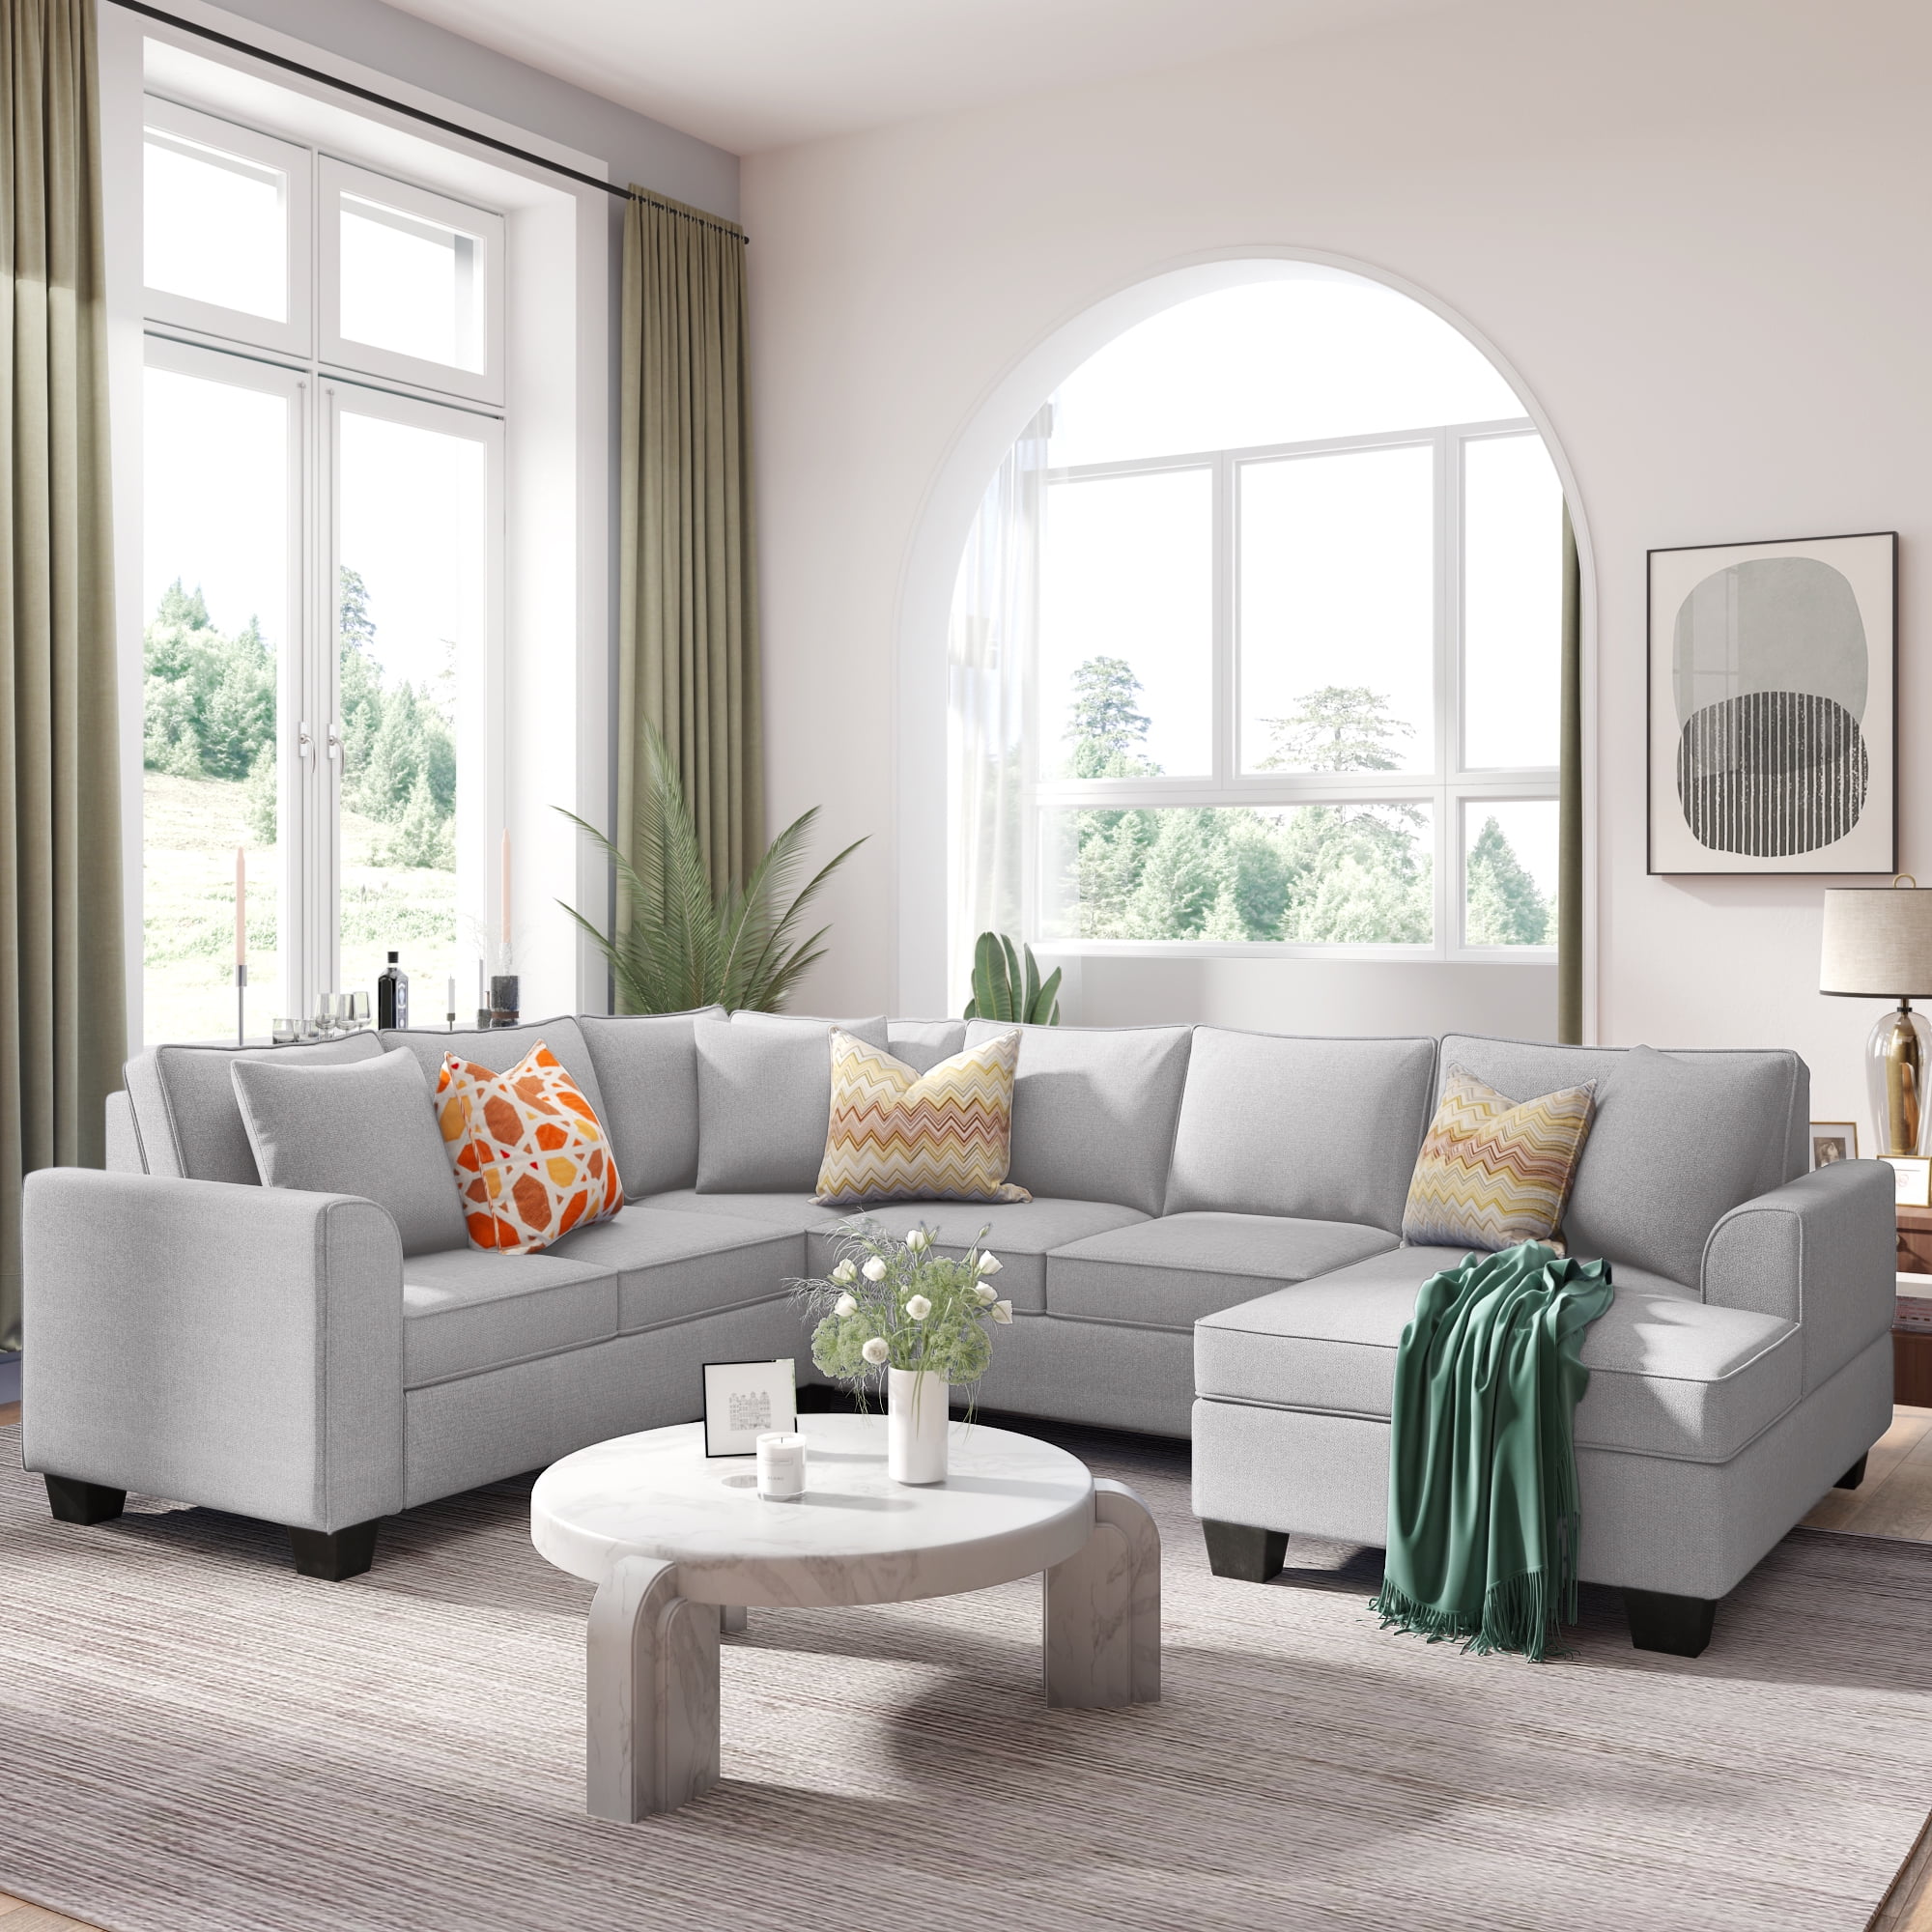 modern 7 seater living room sectional sofa sets, upholstered